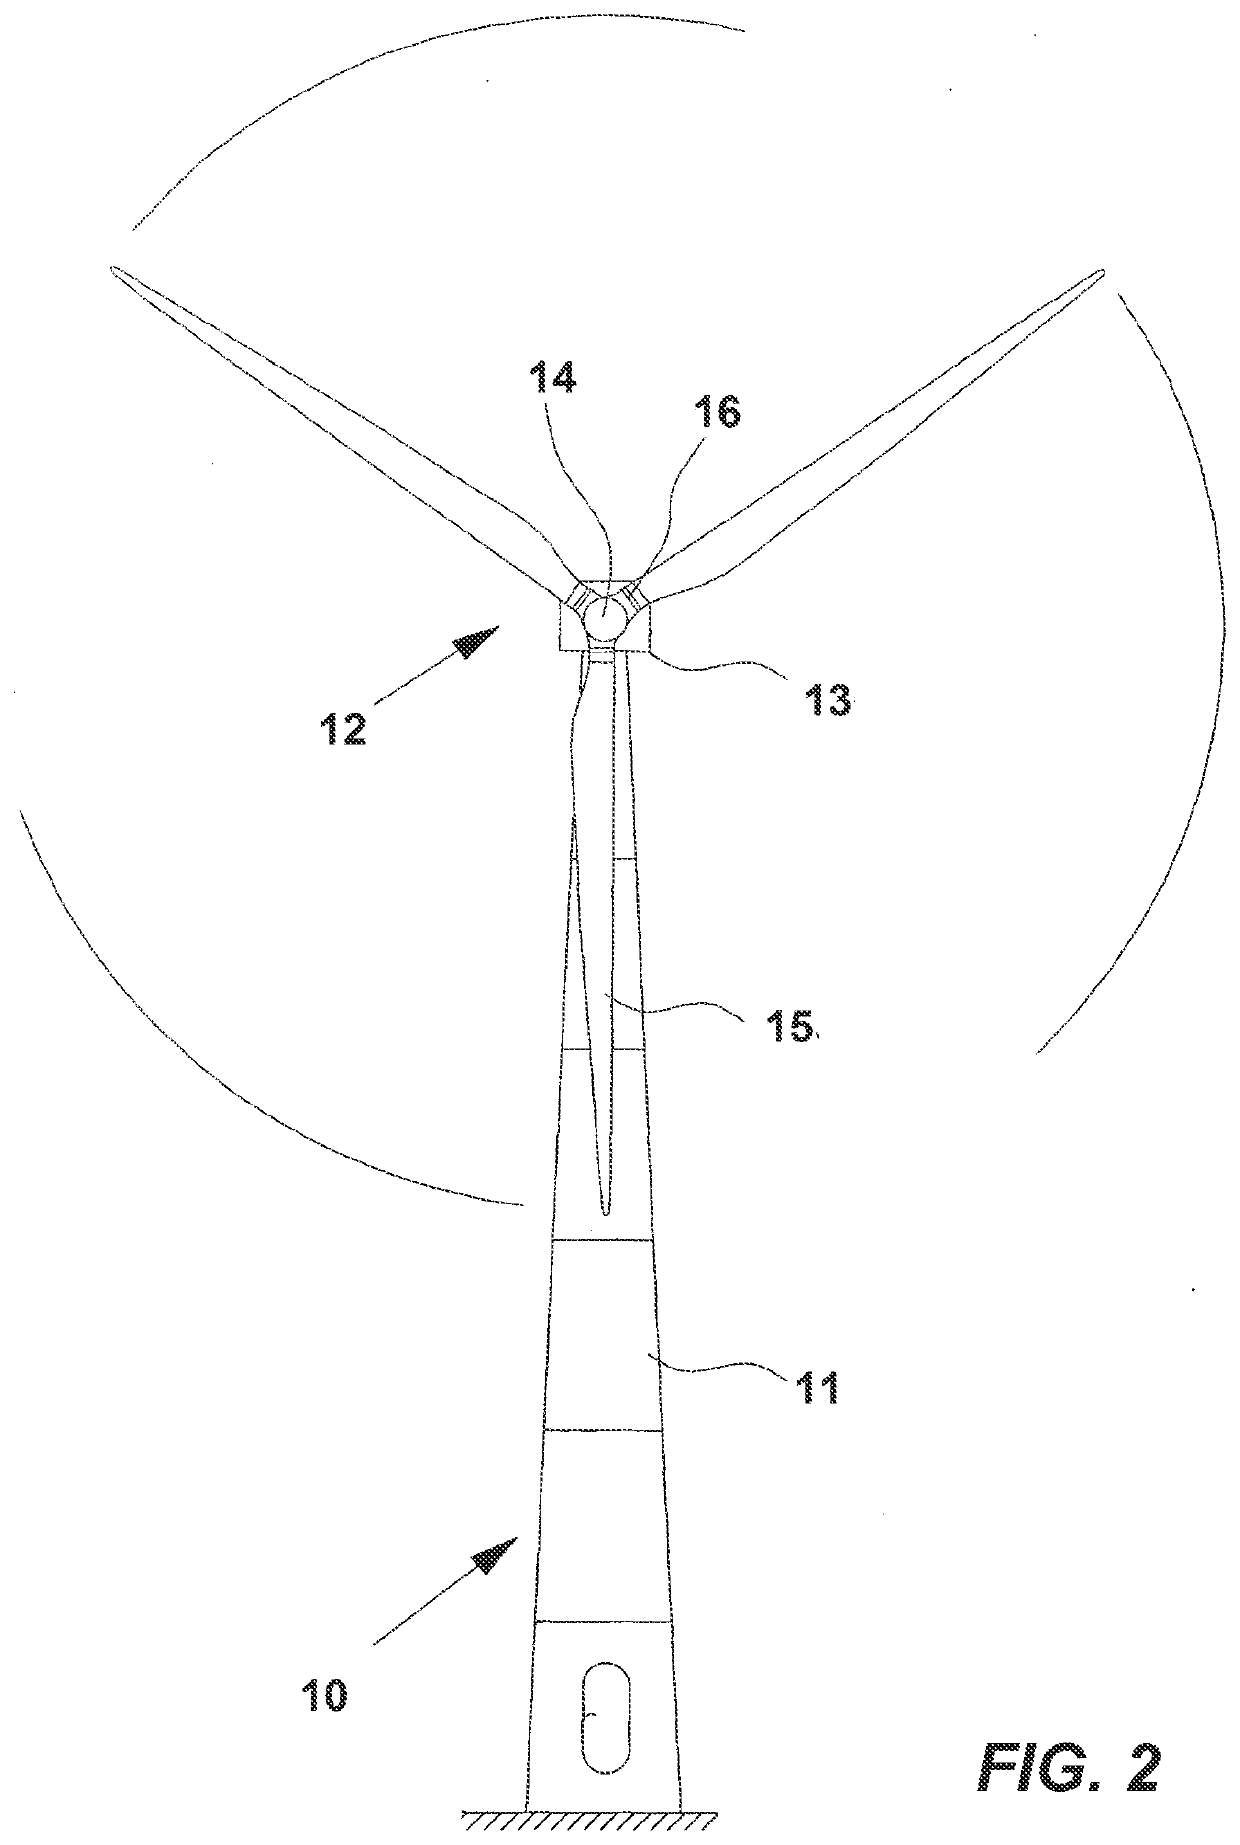 Analysis of wind turbine noise